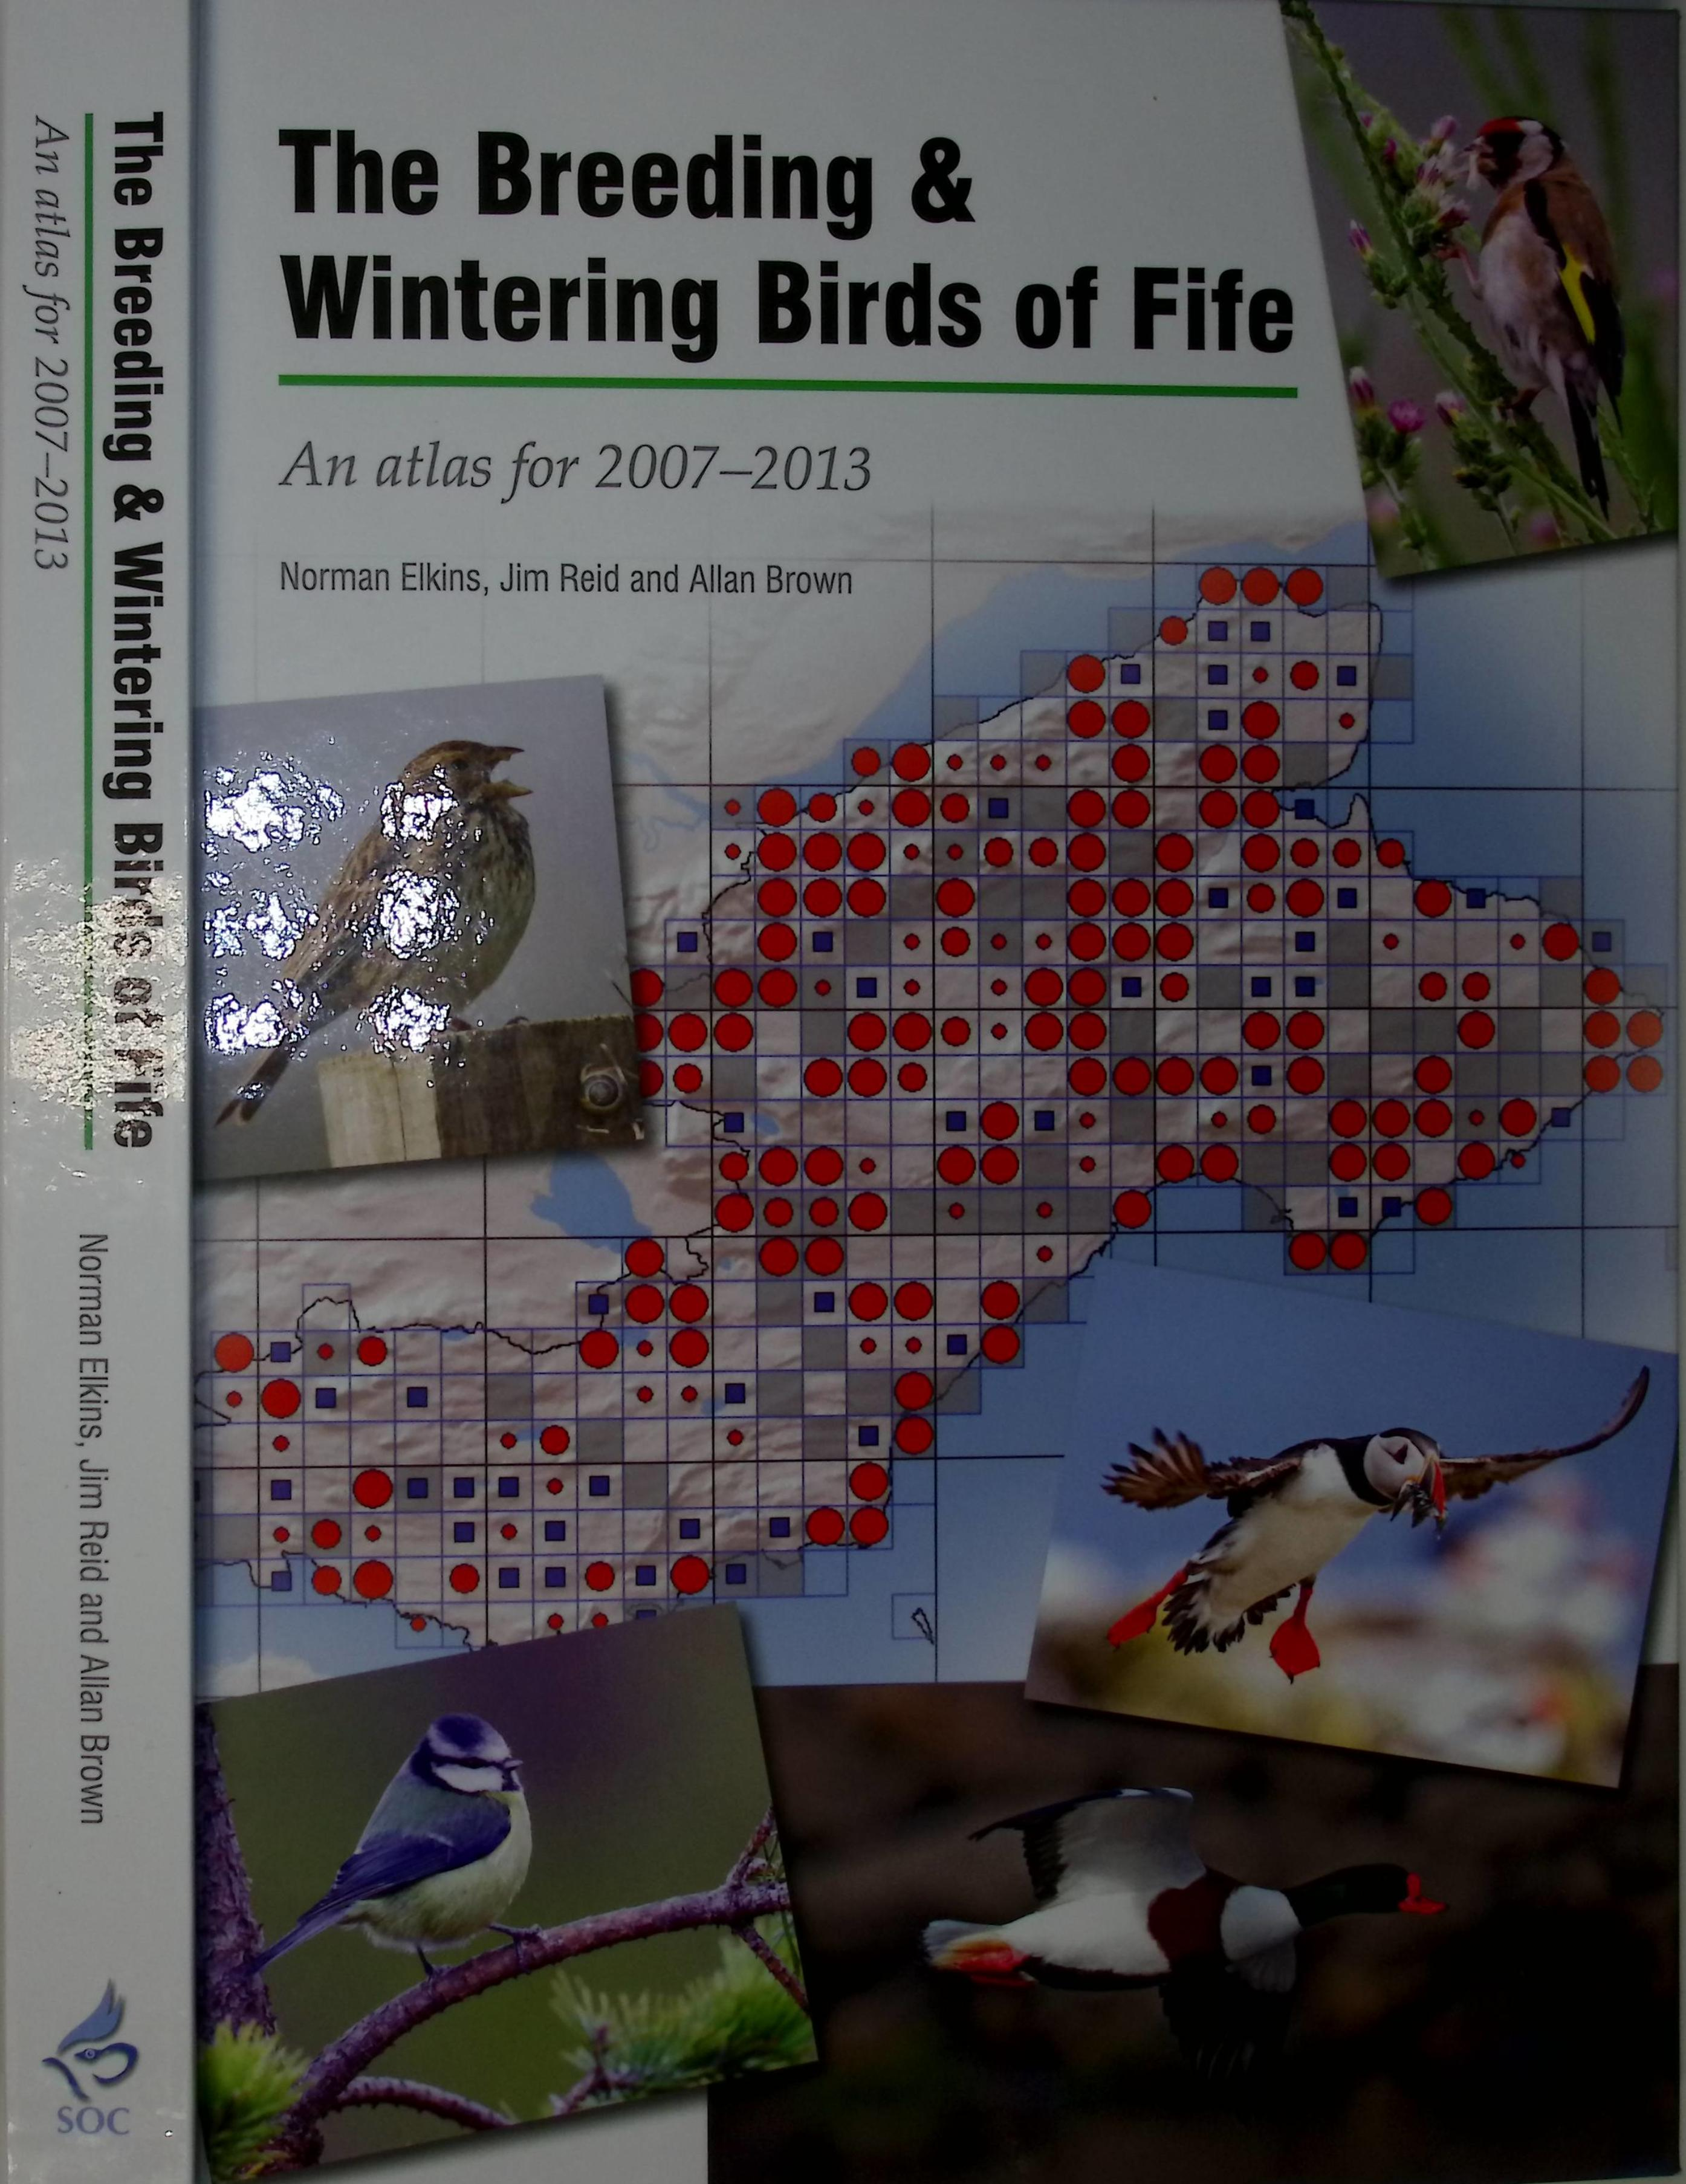 The Breeding & Wintering Birds of Fife. An Atlas for 2007-2013.